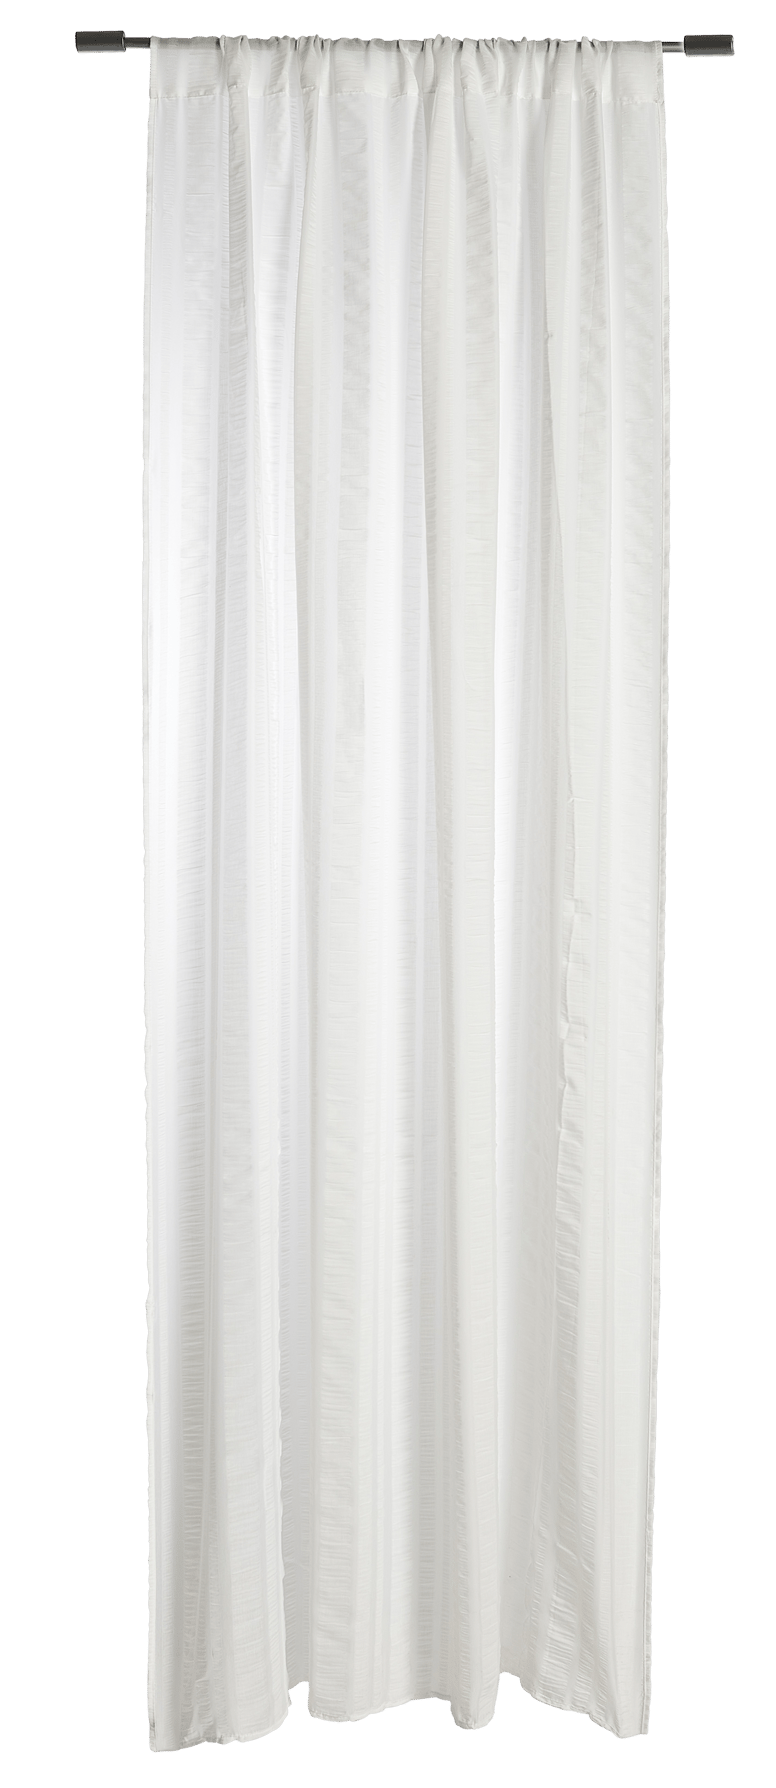 CELINE Cortina blanco An. 140 x L 240 cm